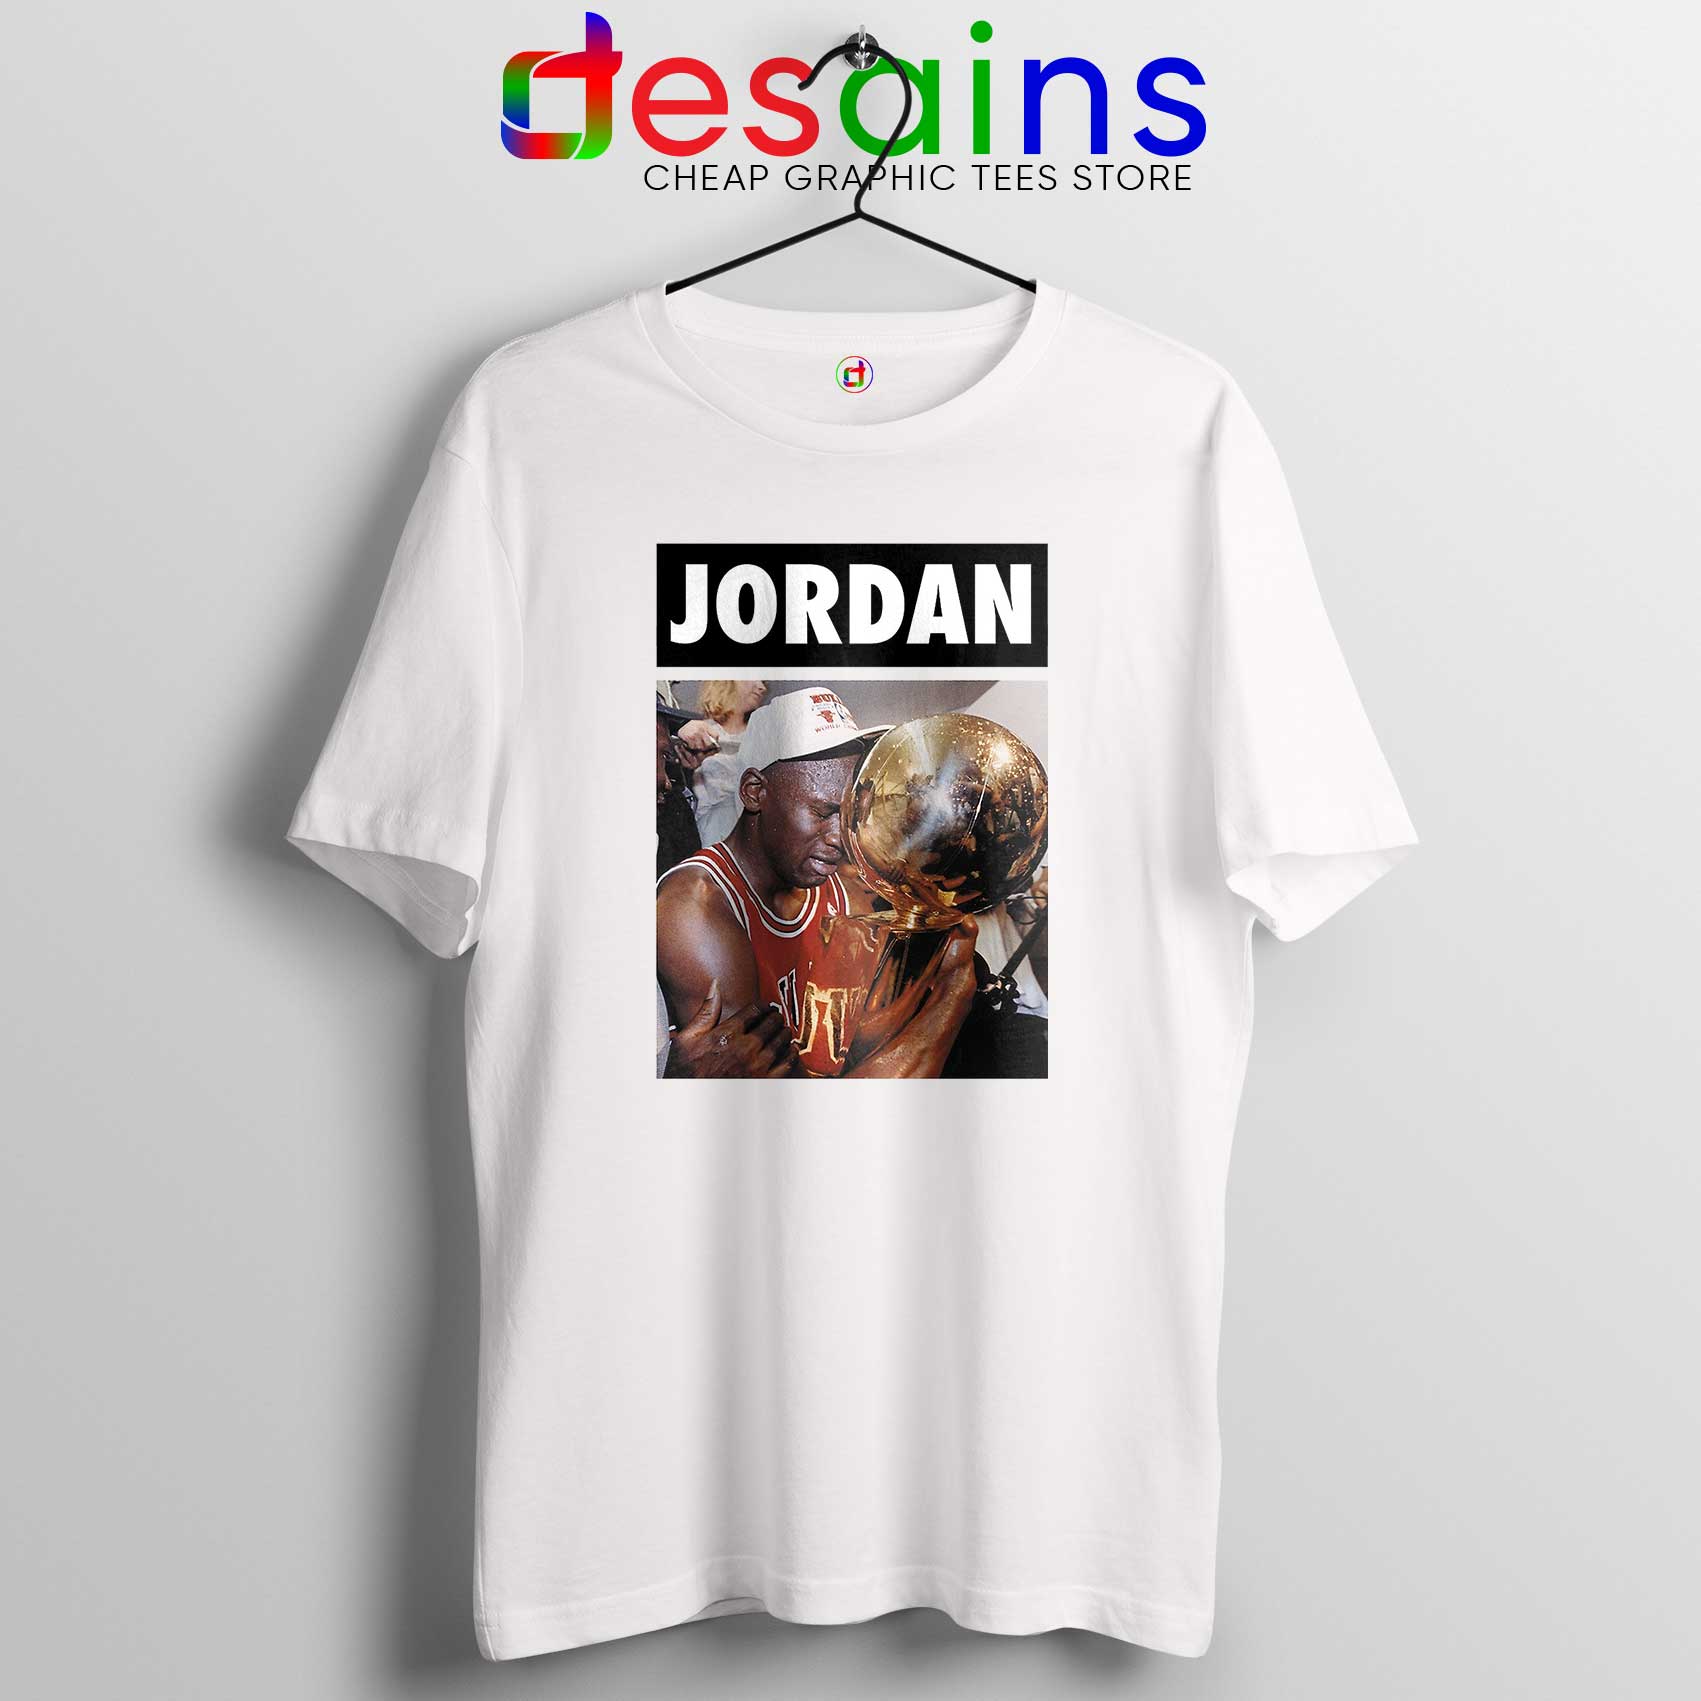 michael jordan graphic t shirts